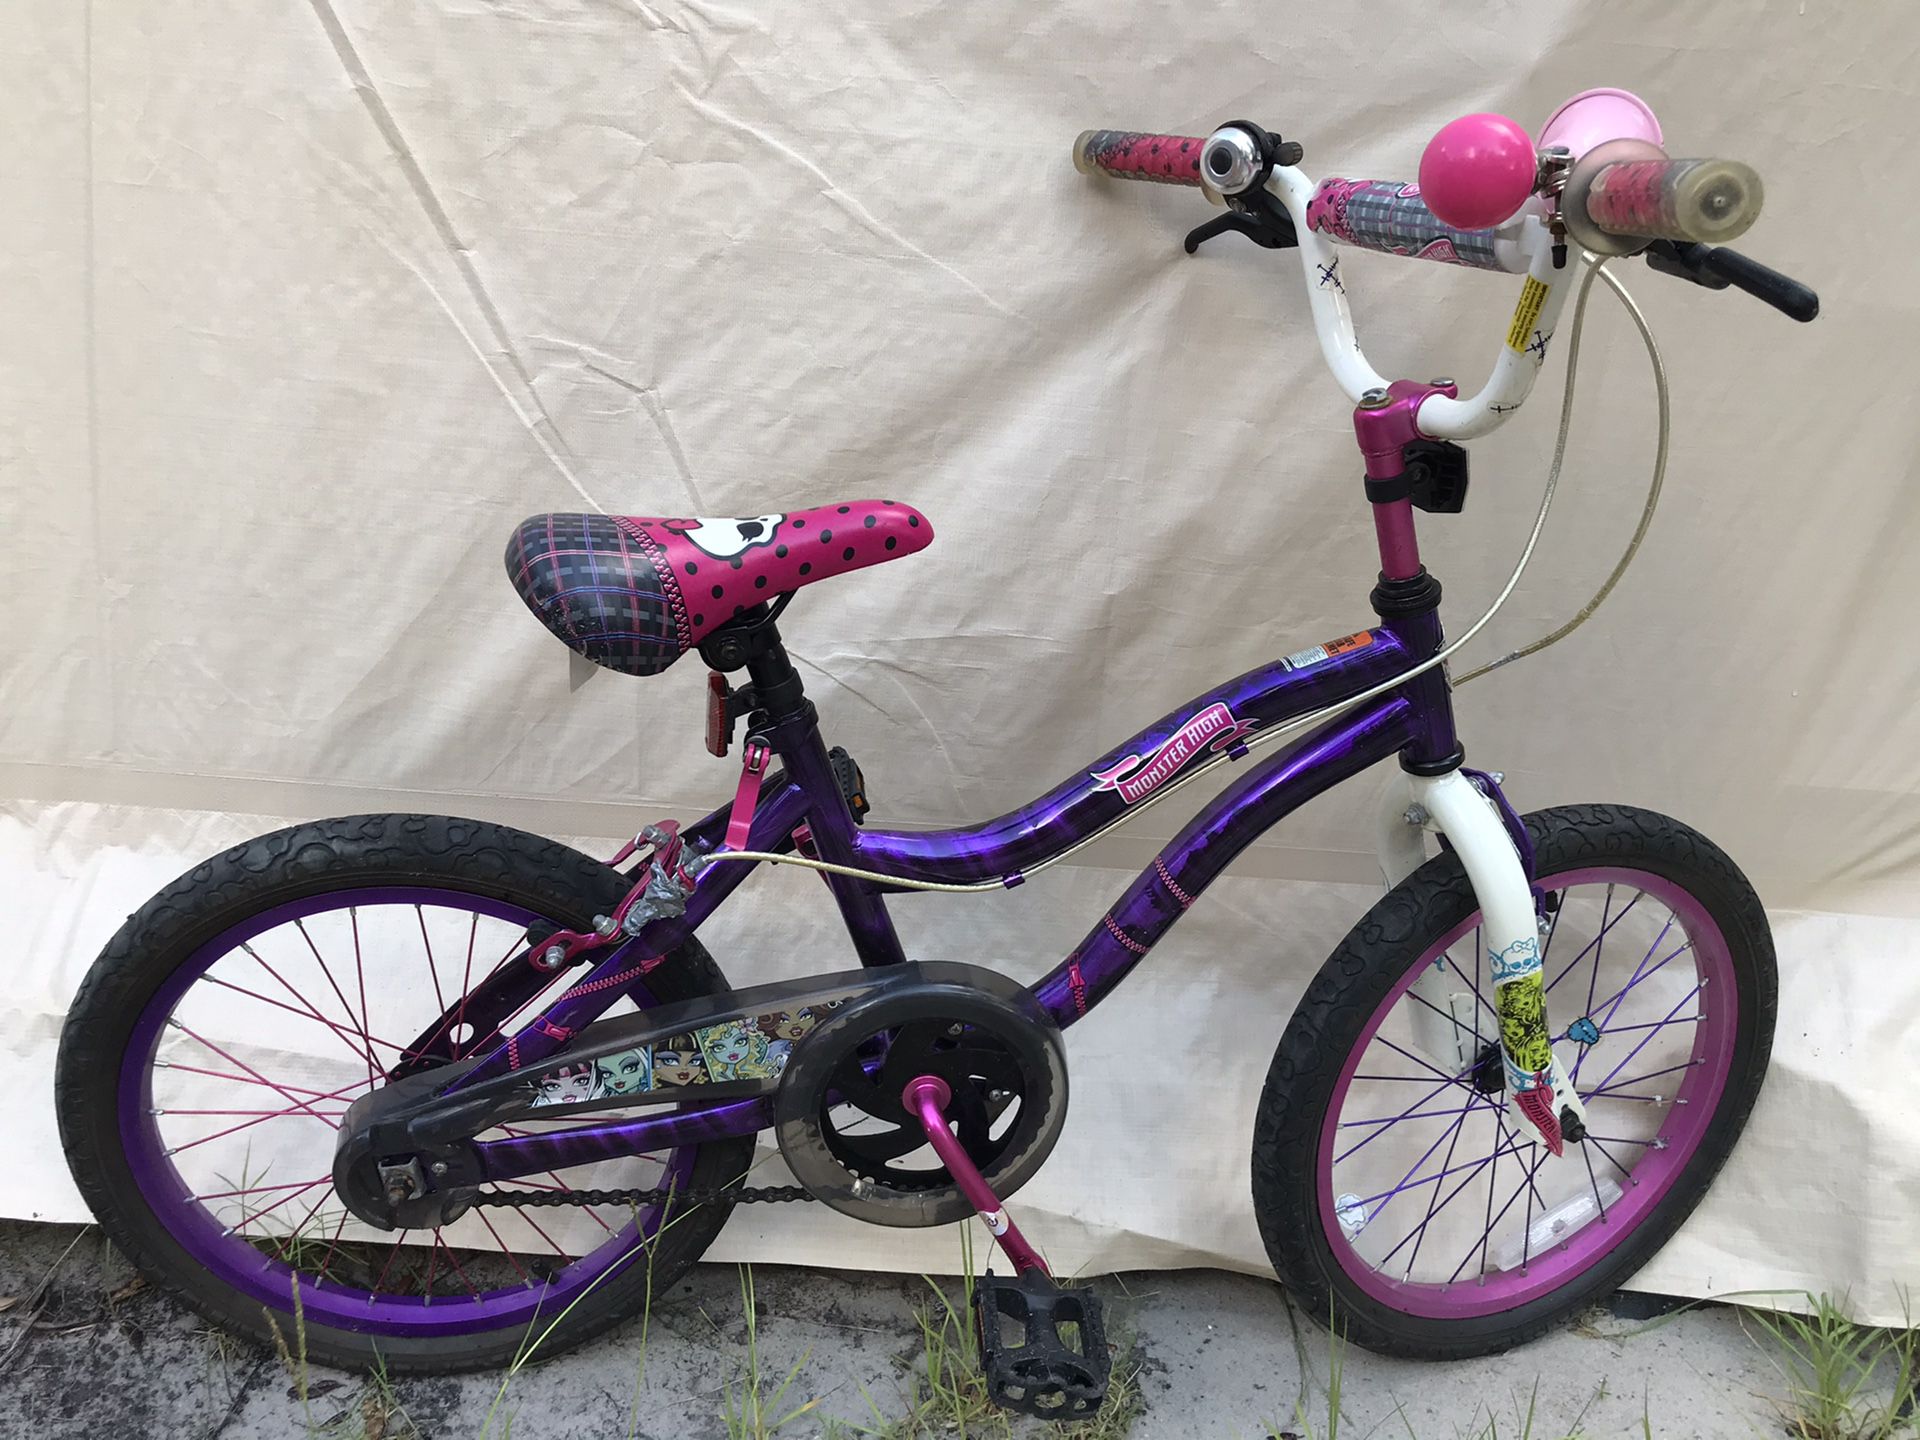 Monster high skull polkadot plaid bike pink purple white